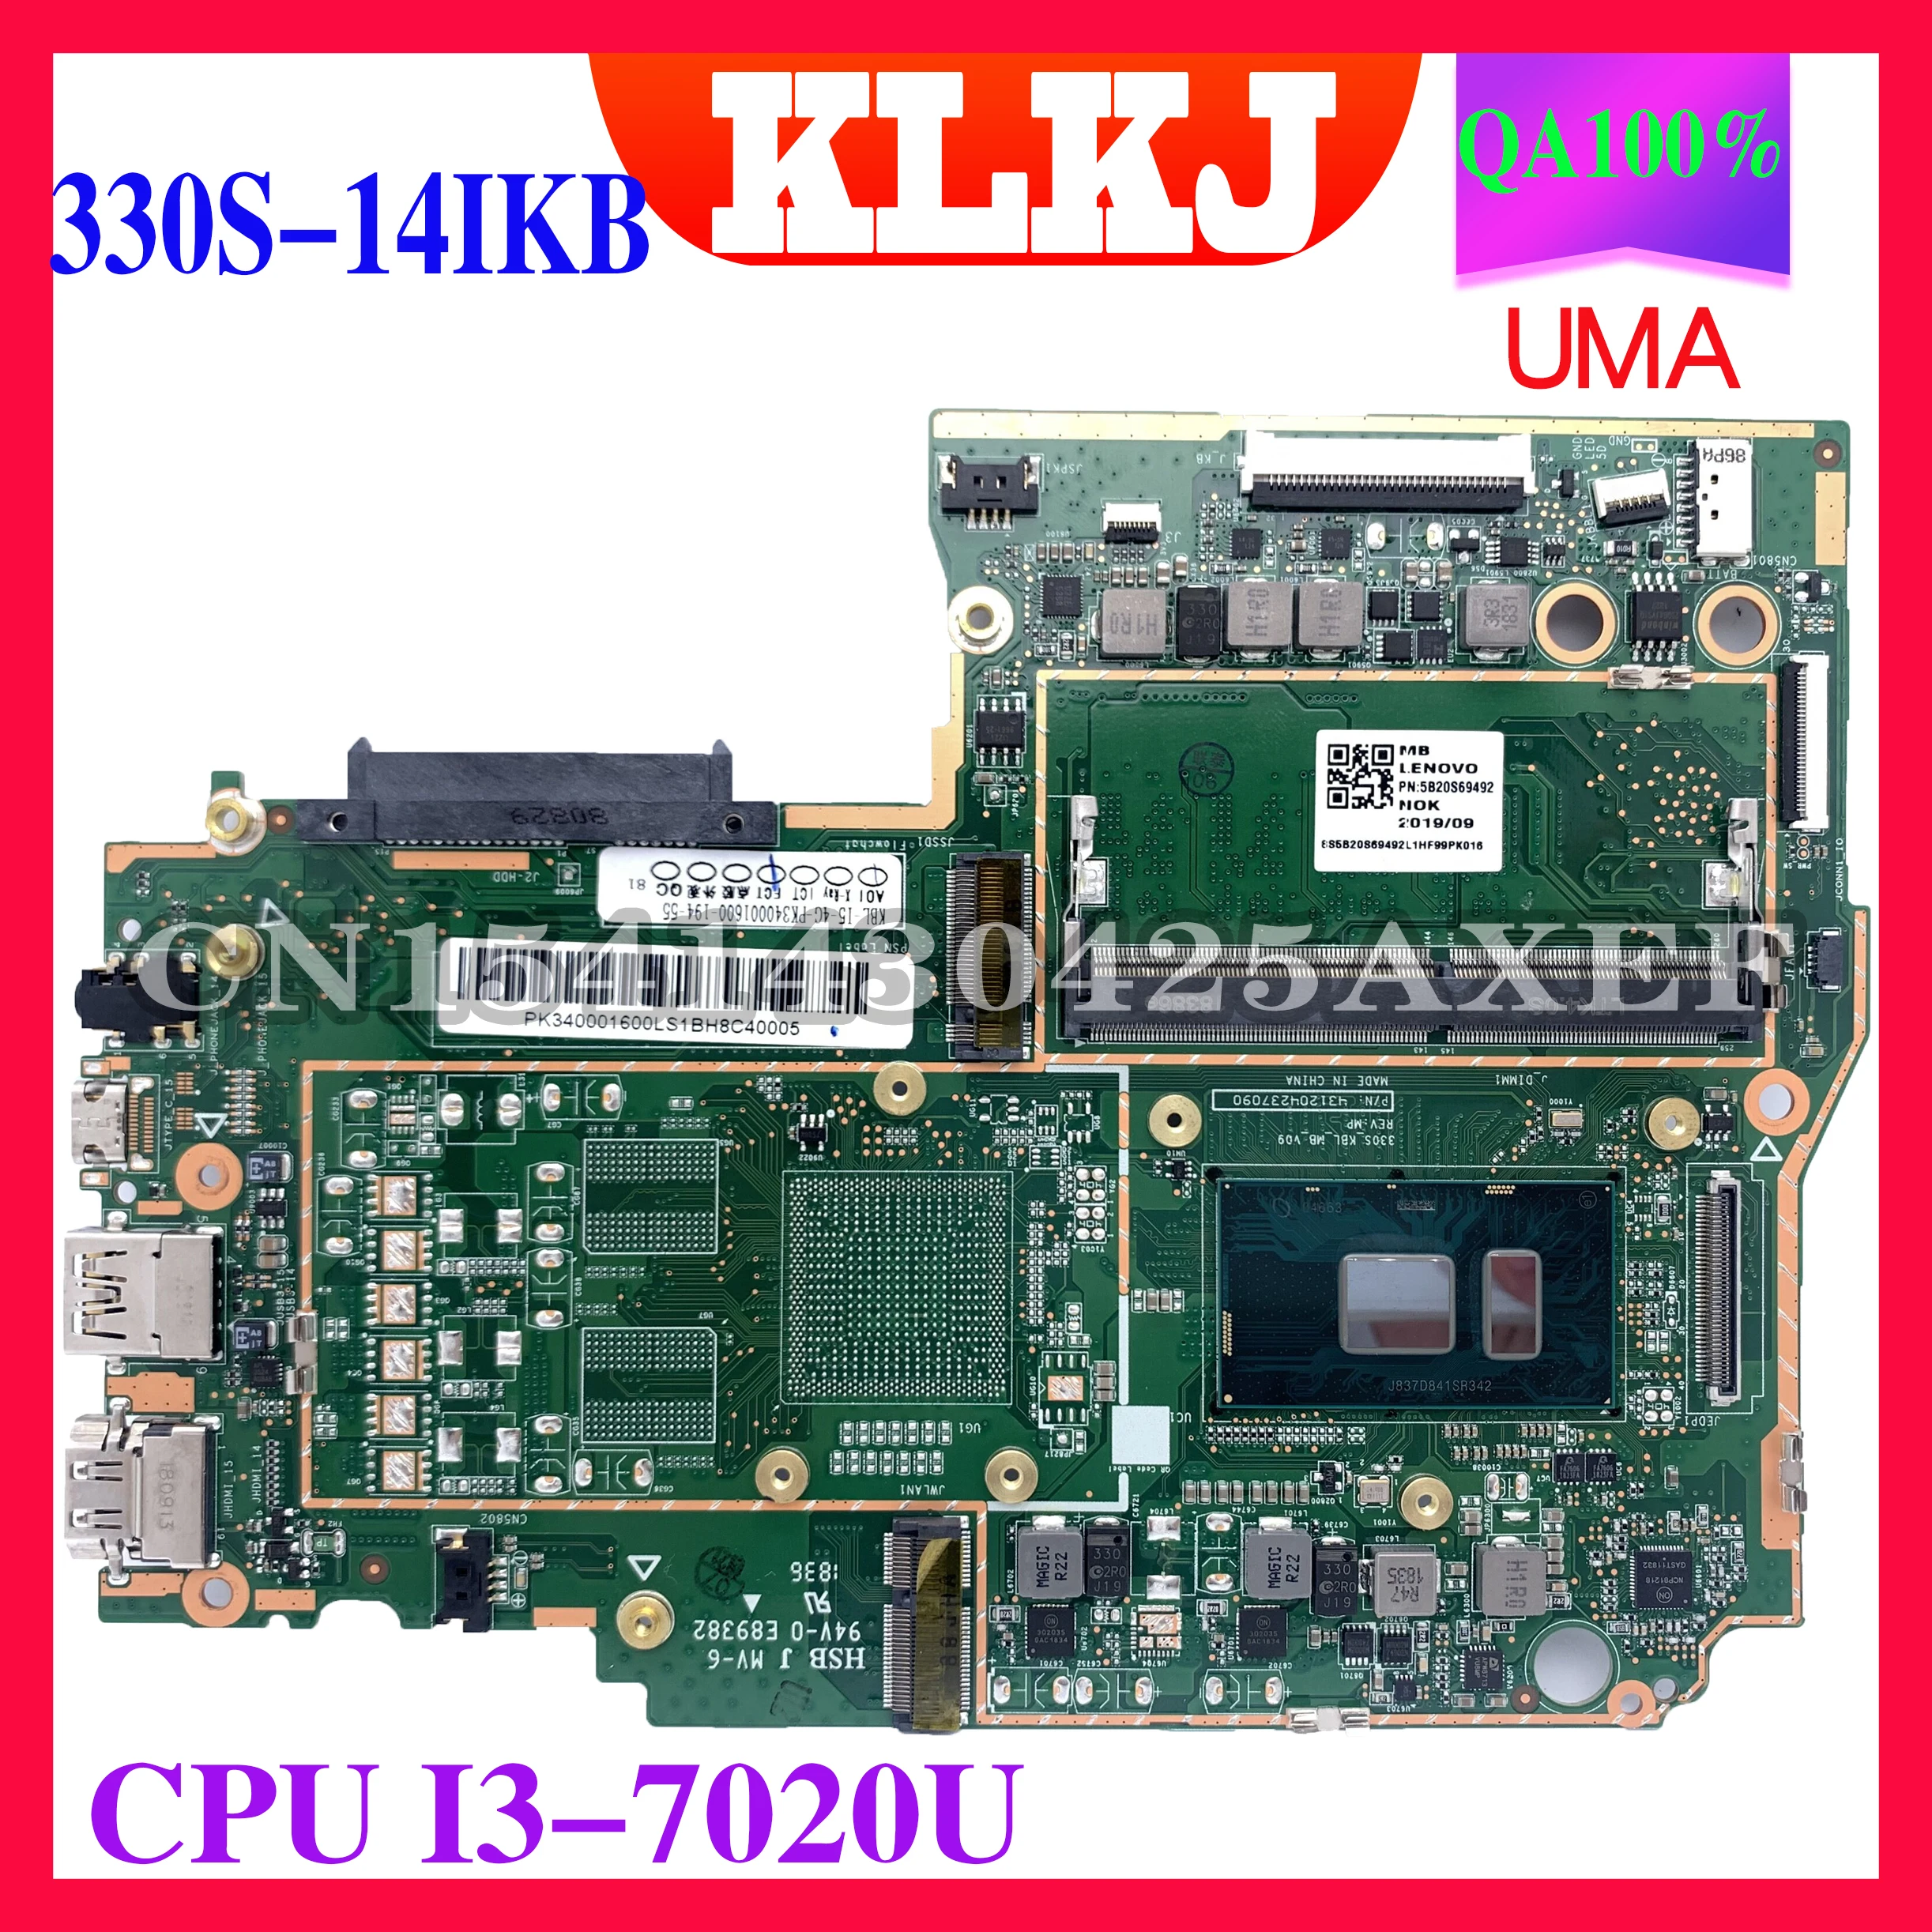 

KLKJ 330S_KBL_MB_V07 Laptop Motherboard For Lenovo Ideapad 330S-14IKB Original Mainboard 4GB-RAM I3-7020U UMA